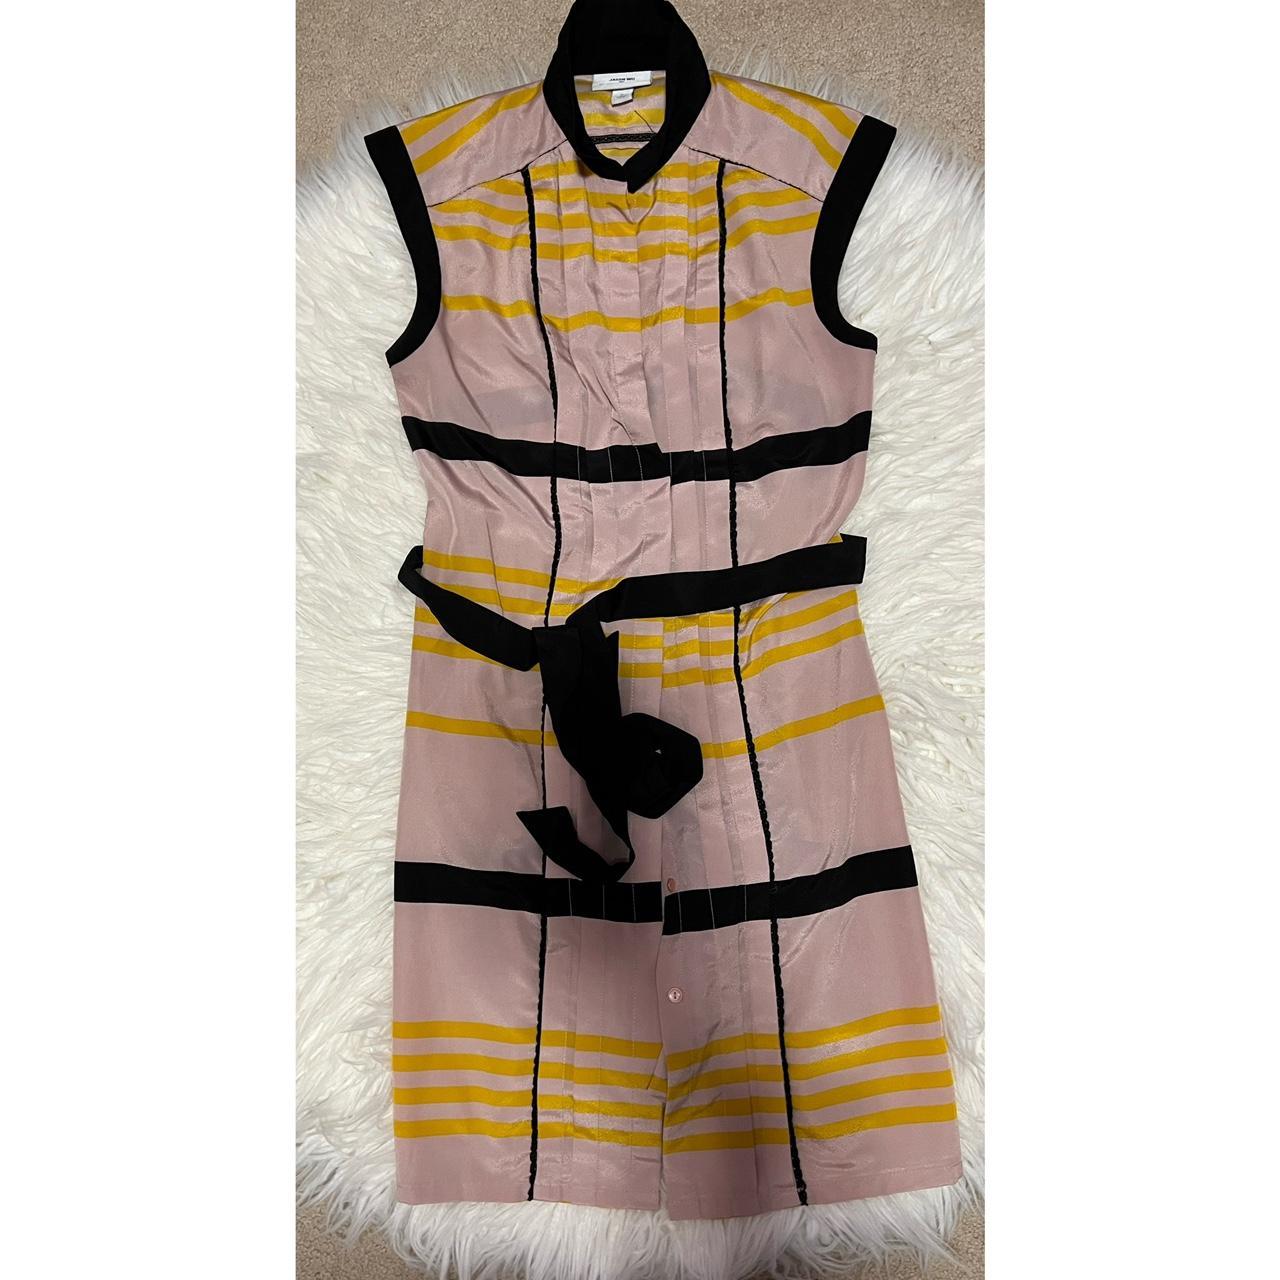 Womens Stripe Dress : Target